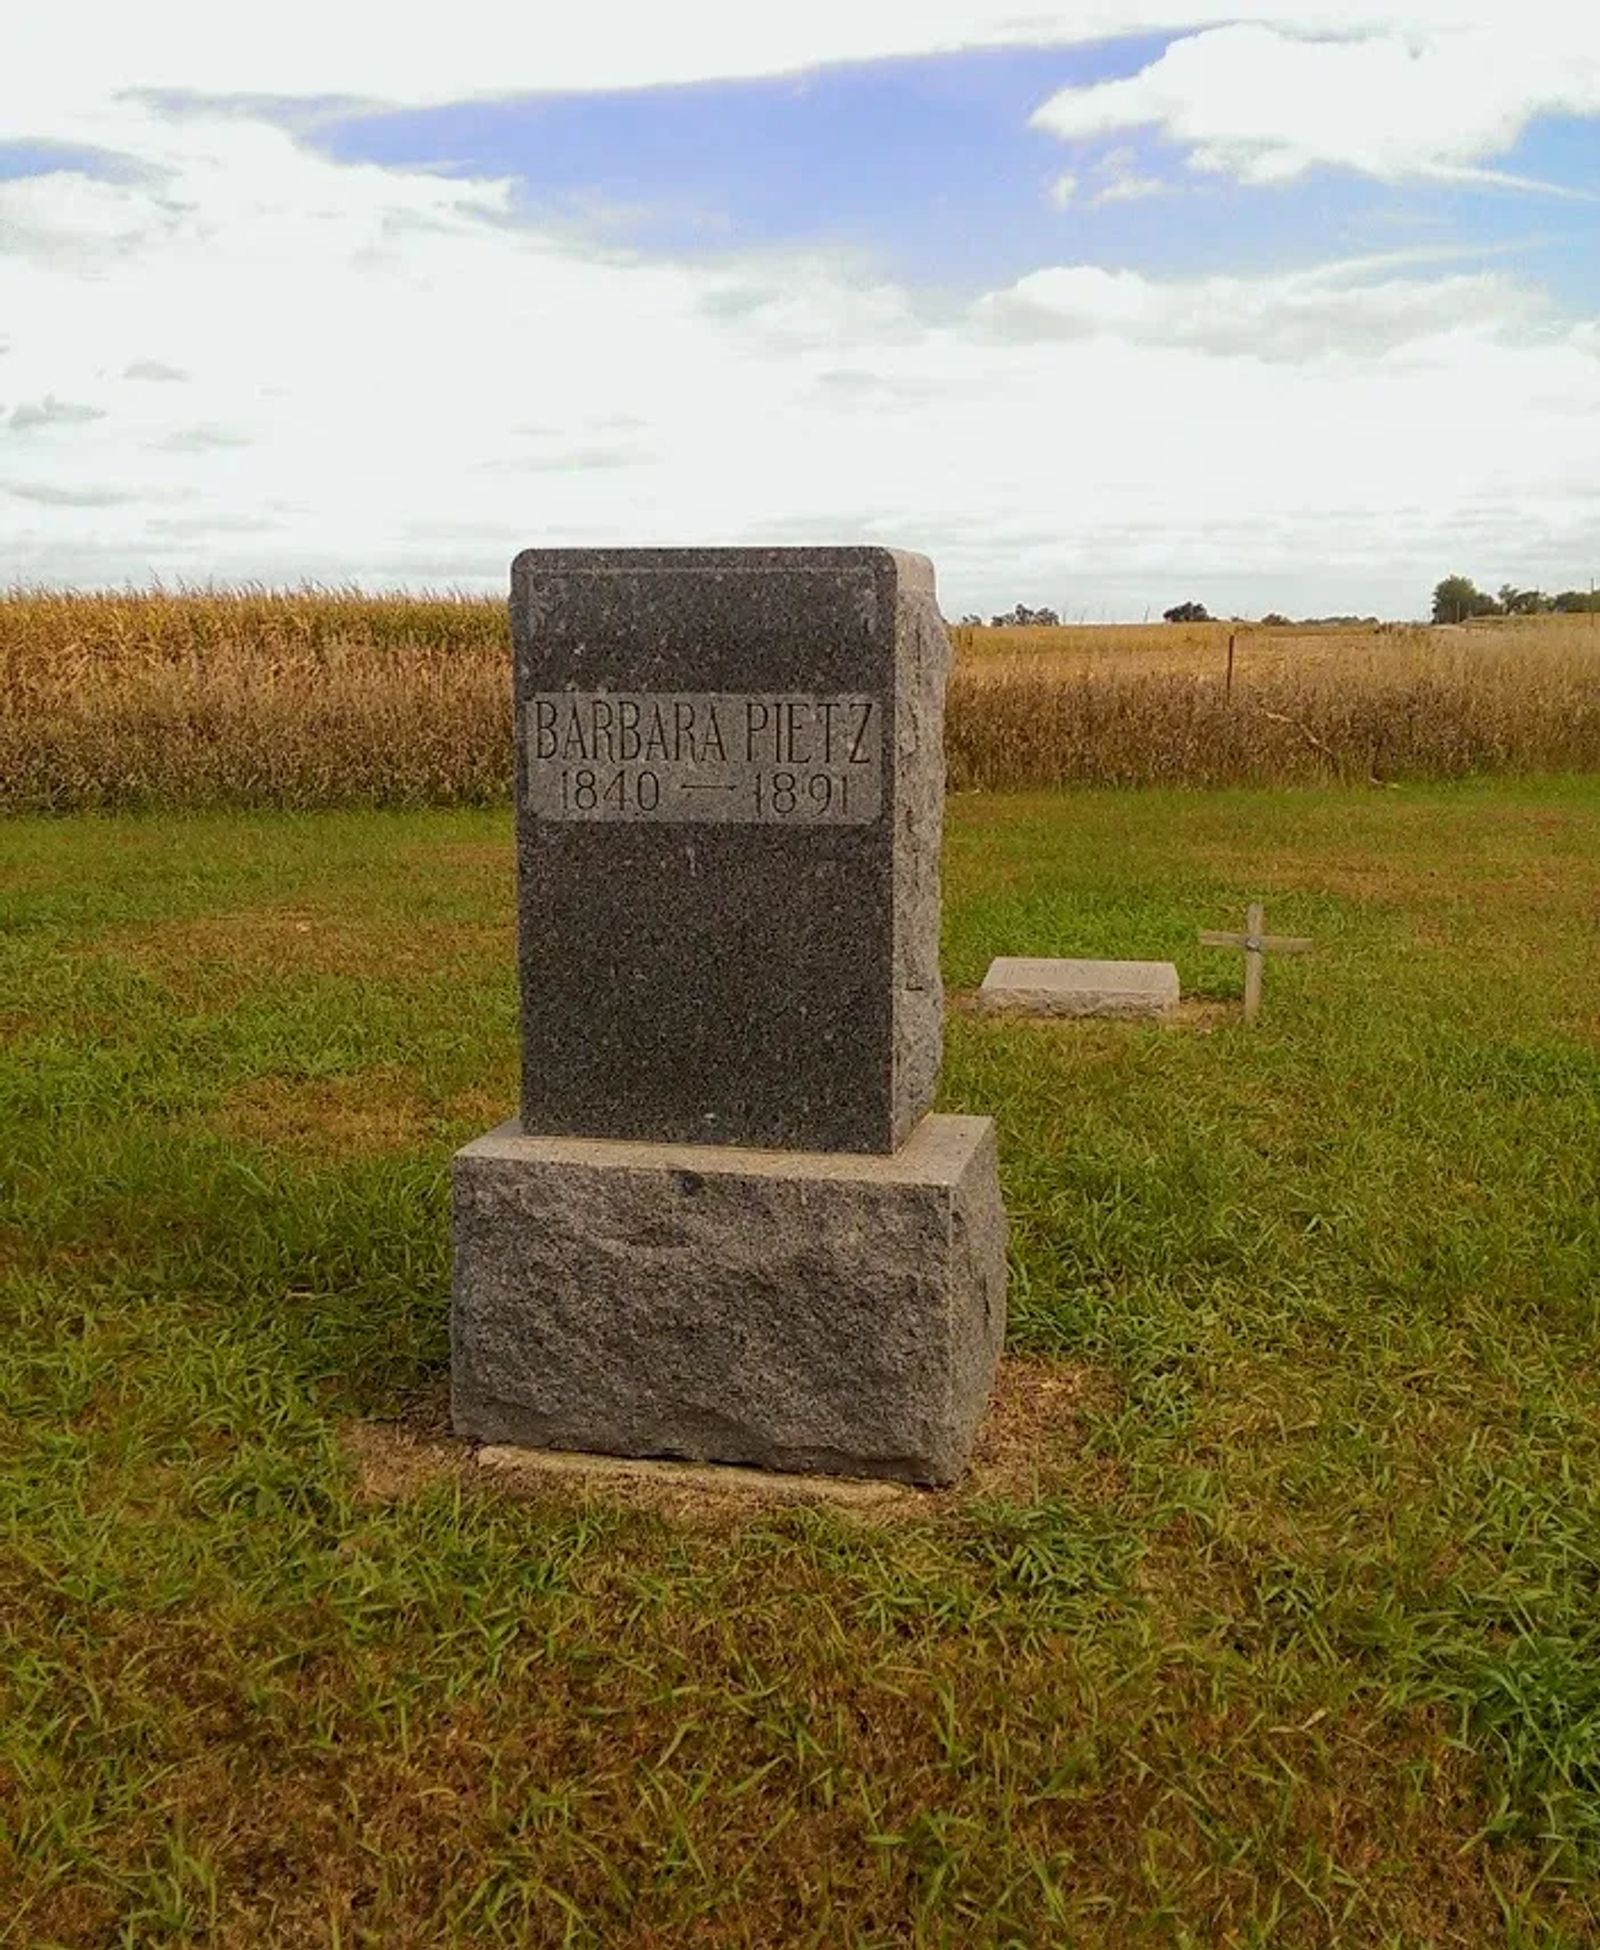 Photo of The "Pietz Cemetery" near Scotland, South Dakota